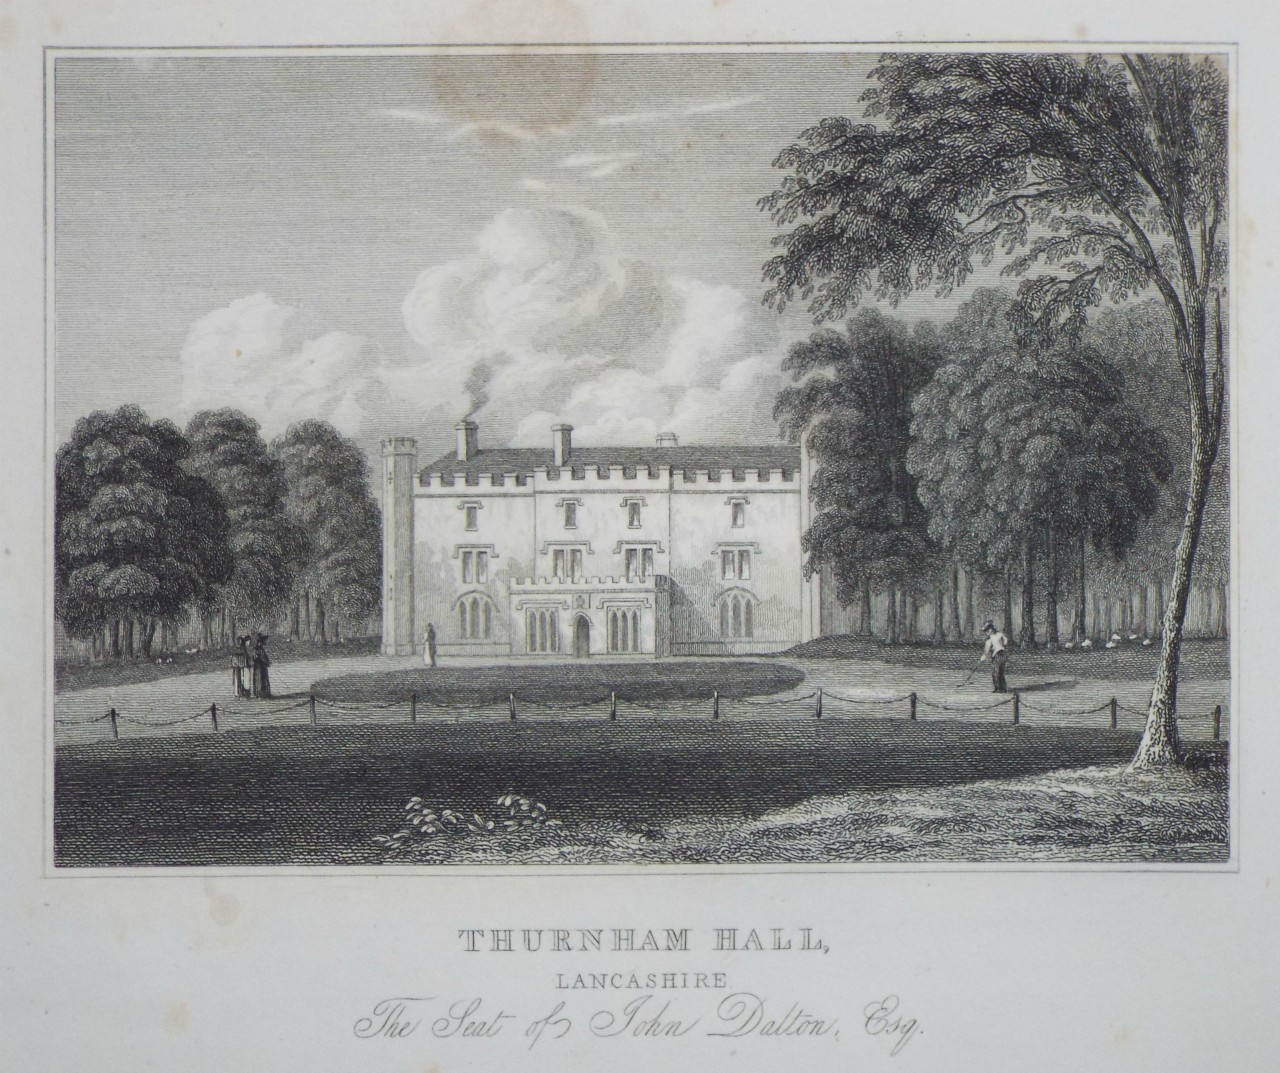 Print - Thurnham Hall, Leicestershire. The Seat of John Dalton, Esq. - Heath